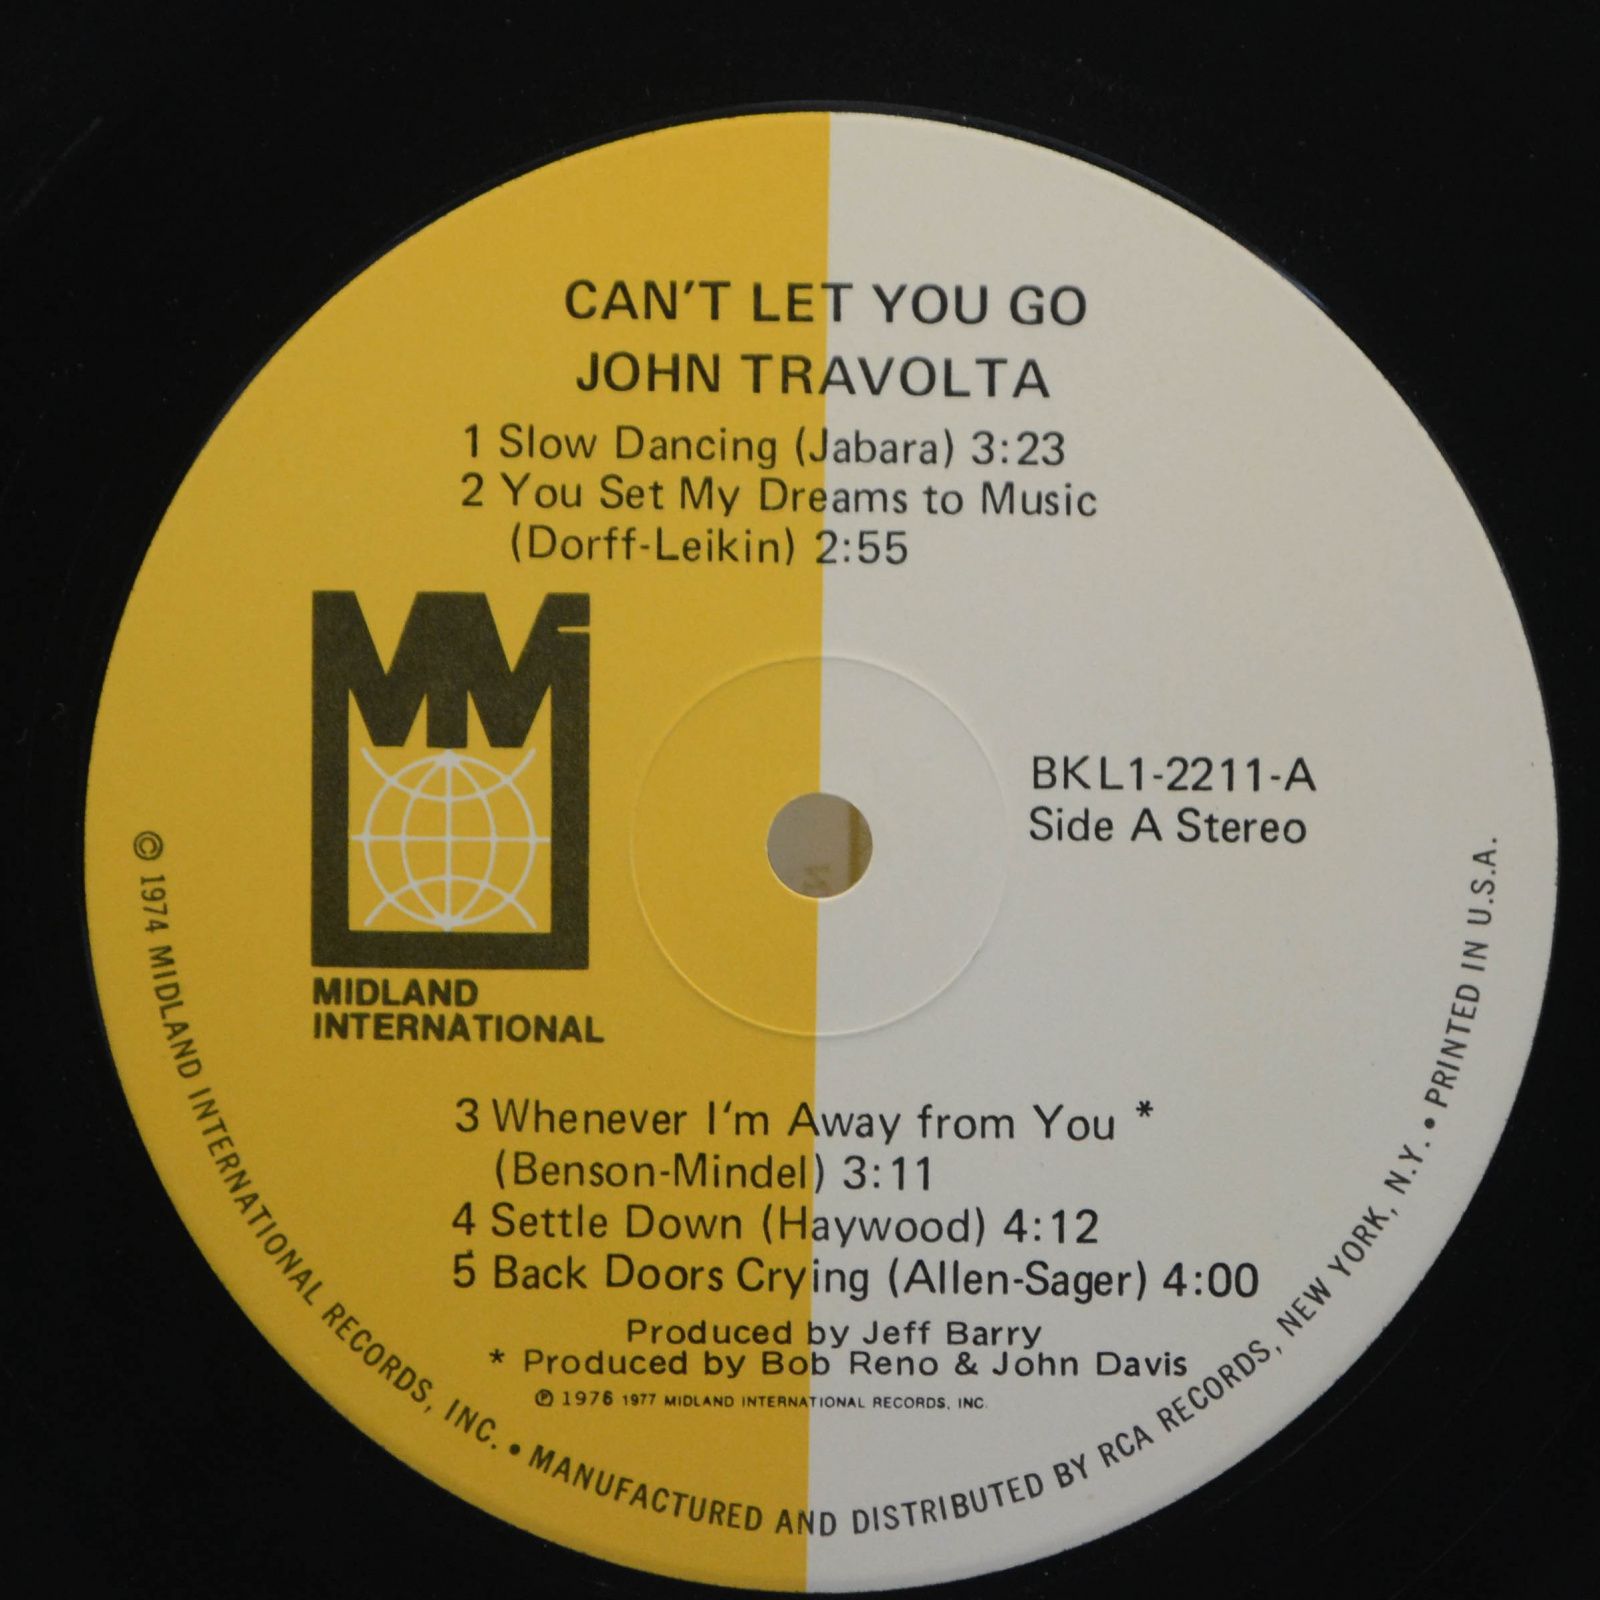 John Travolta — Can't Let You Go, 1977